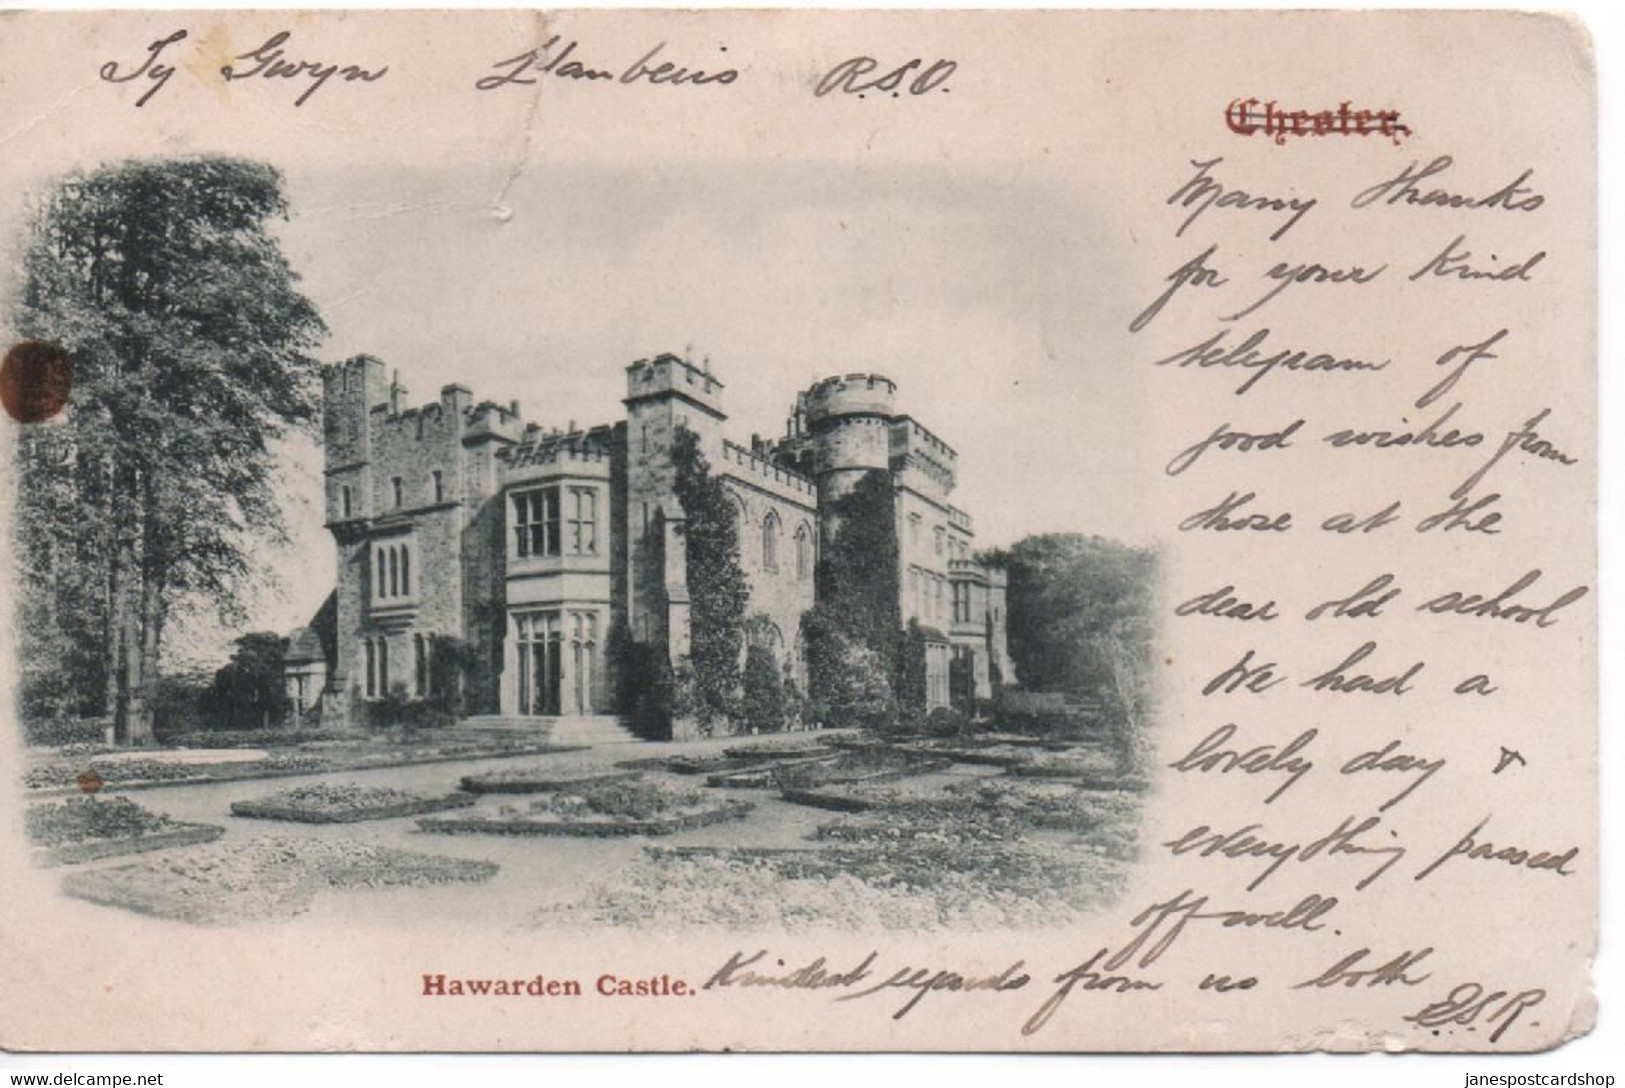 HAWARDEN CASTLE - FLINTSHIRE WITH LLANBERIS R.S.O. WRITTEN ON CARD - EARLY CARD 1901 - STAMP REMOVED - Flintshire